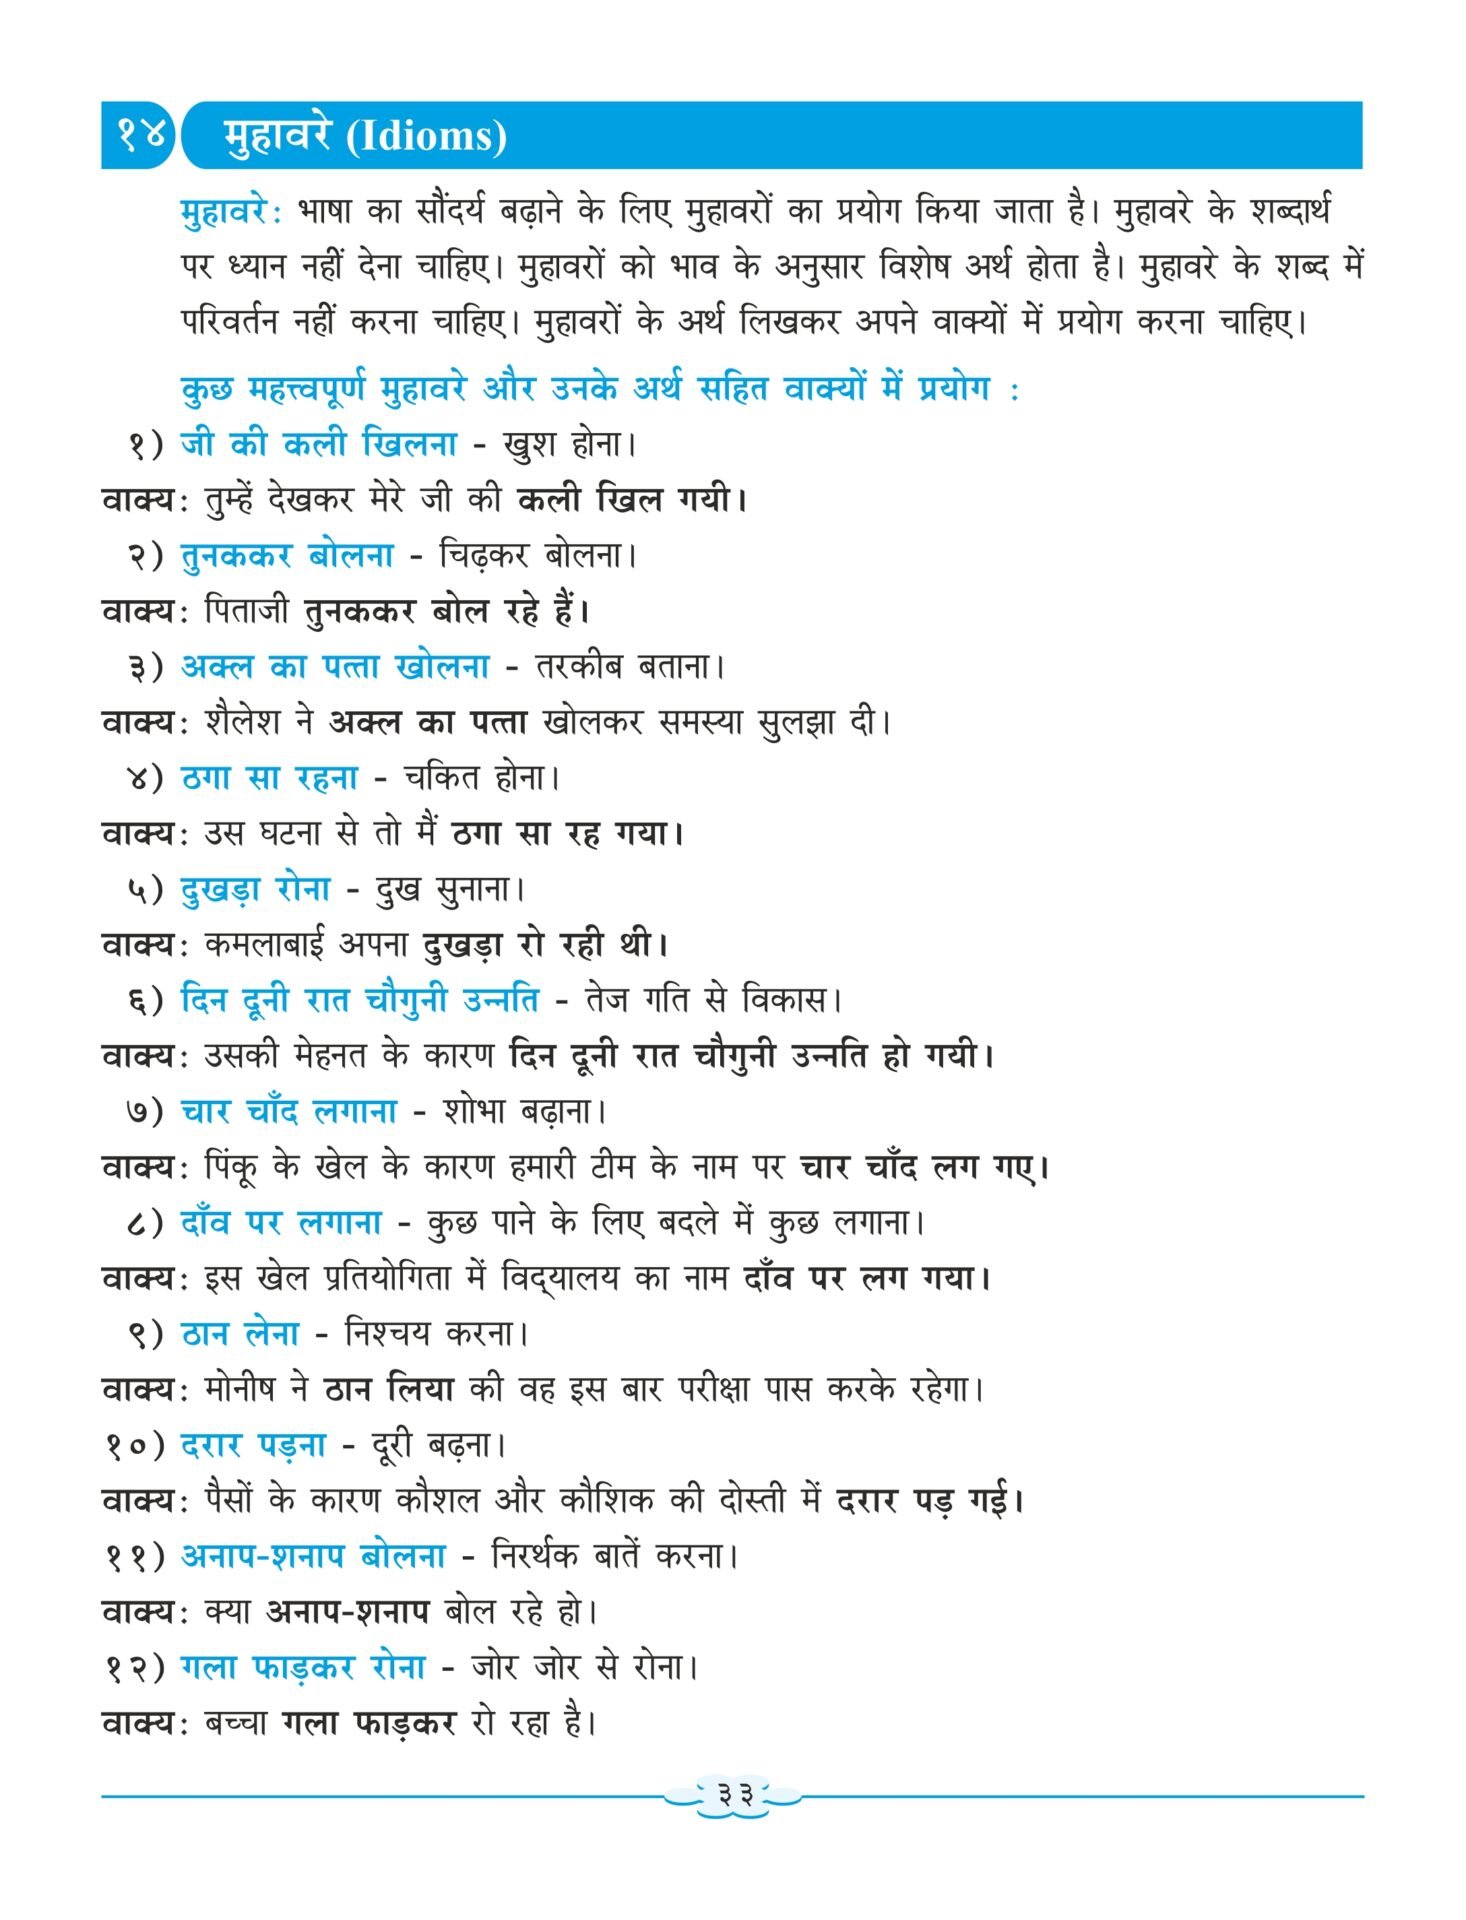 Nigam Hindi Sulabhbharati Grammar And Writing Skills Standard 7 8